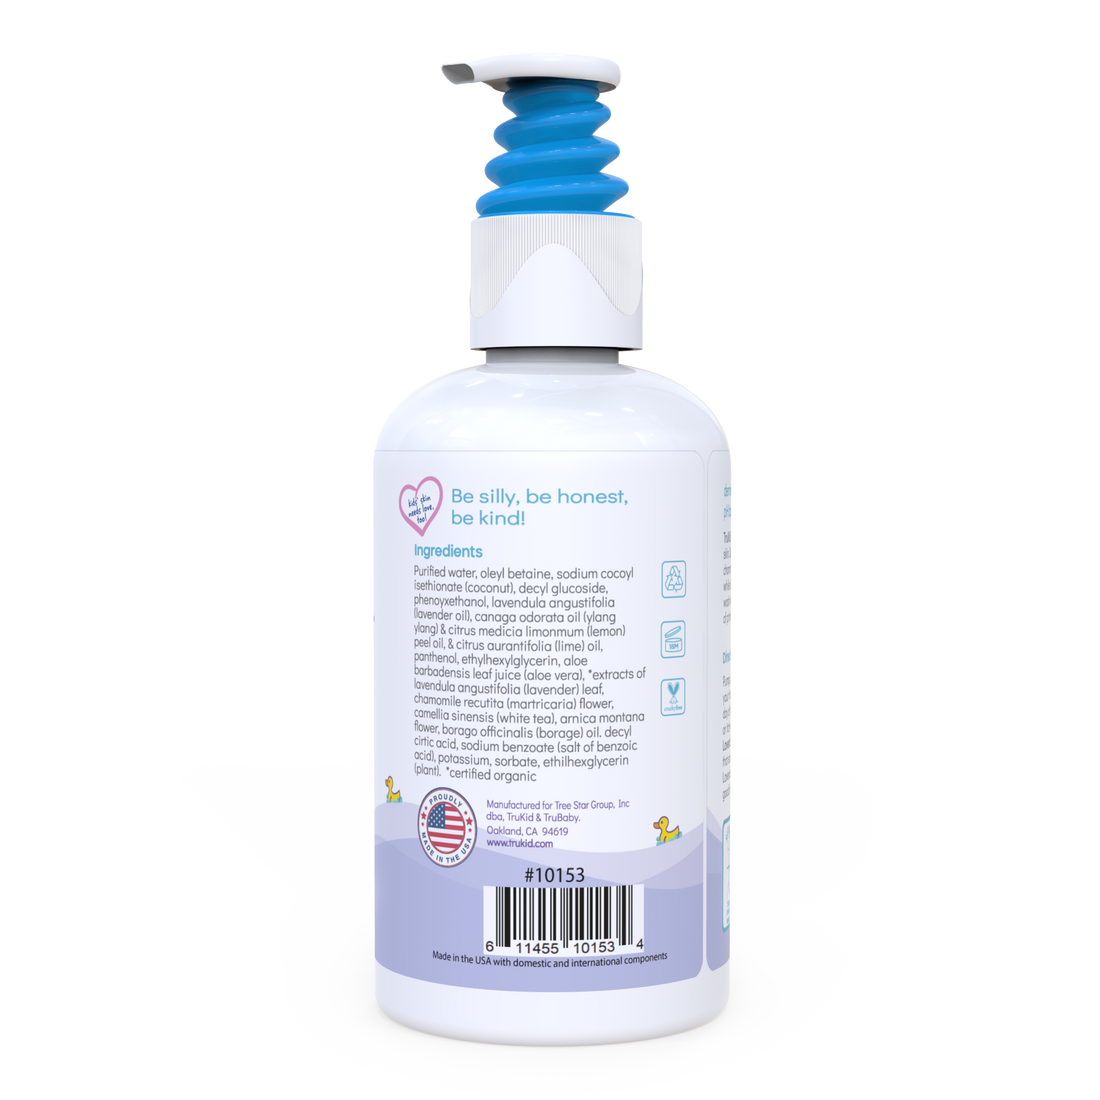 Ingredients panel of TruKid Lavender Hair & Body Wash bottle.